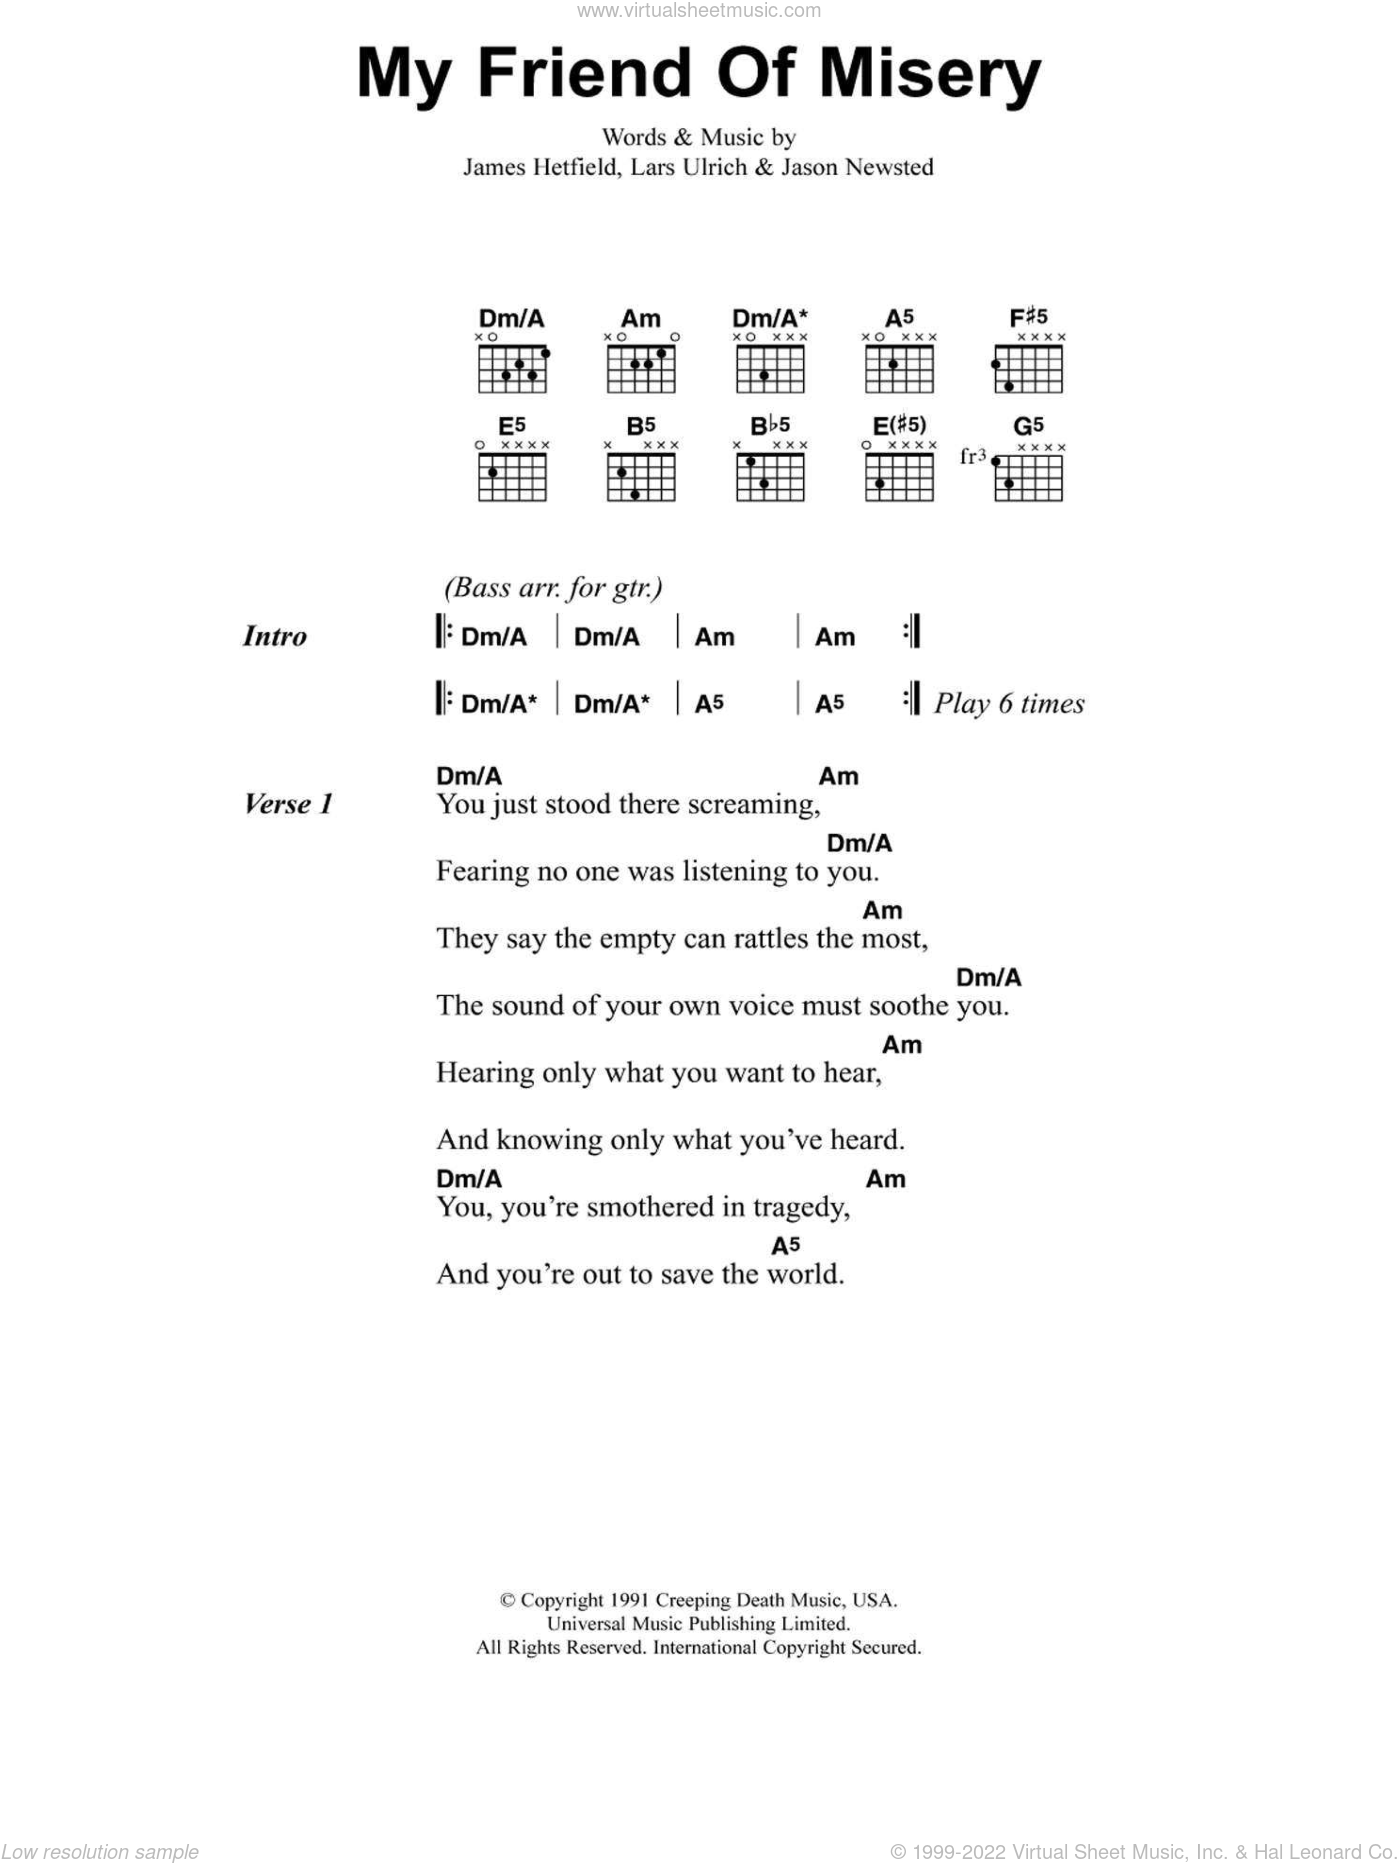 Dyers Eve (Bass Guitar Tab) - Print Sheet Music Now